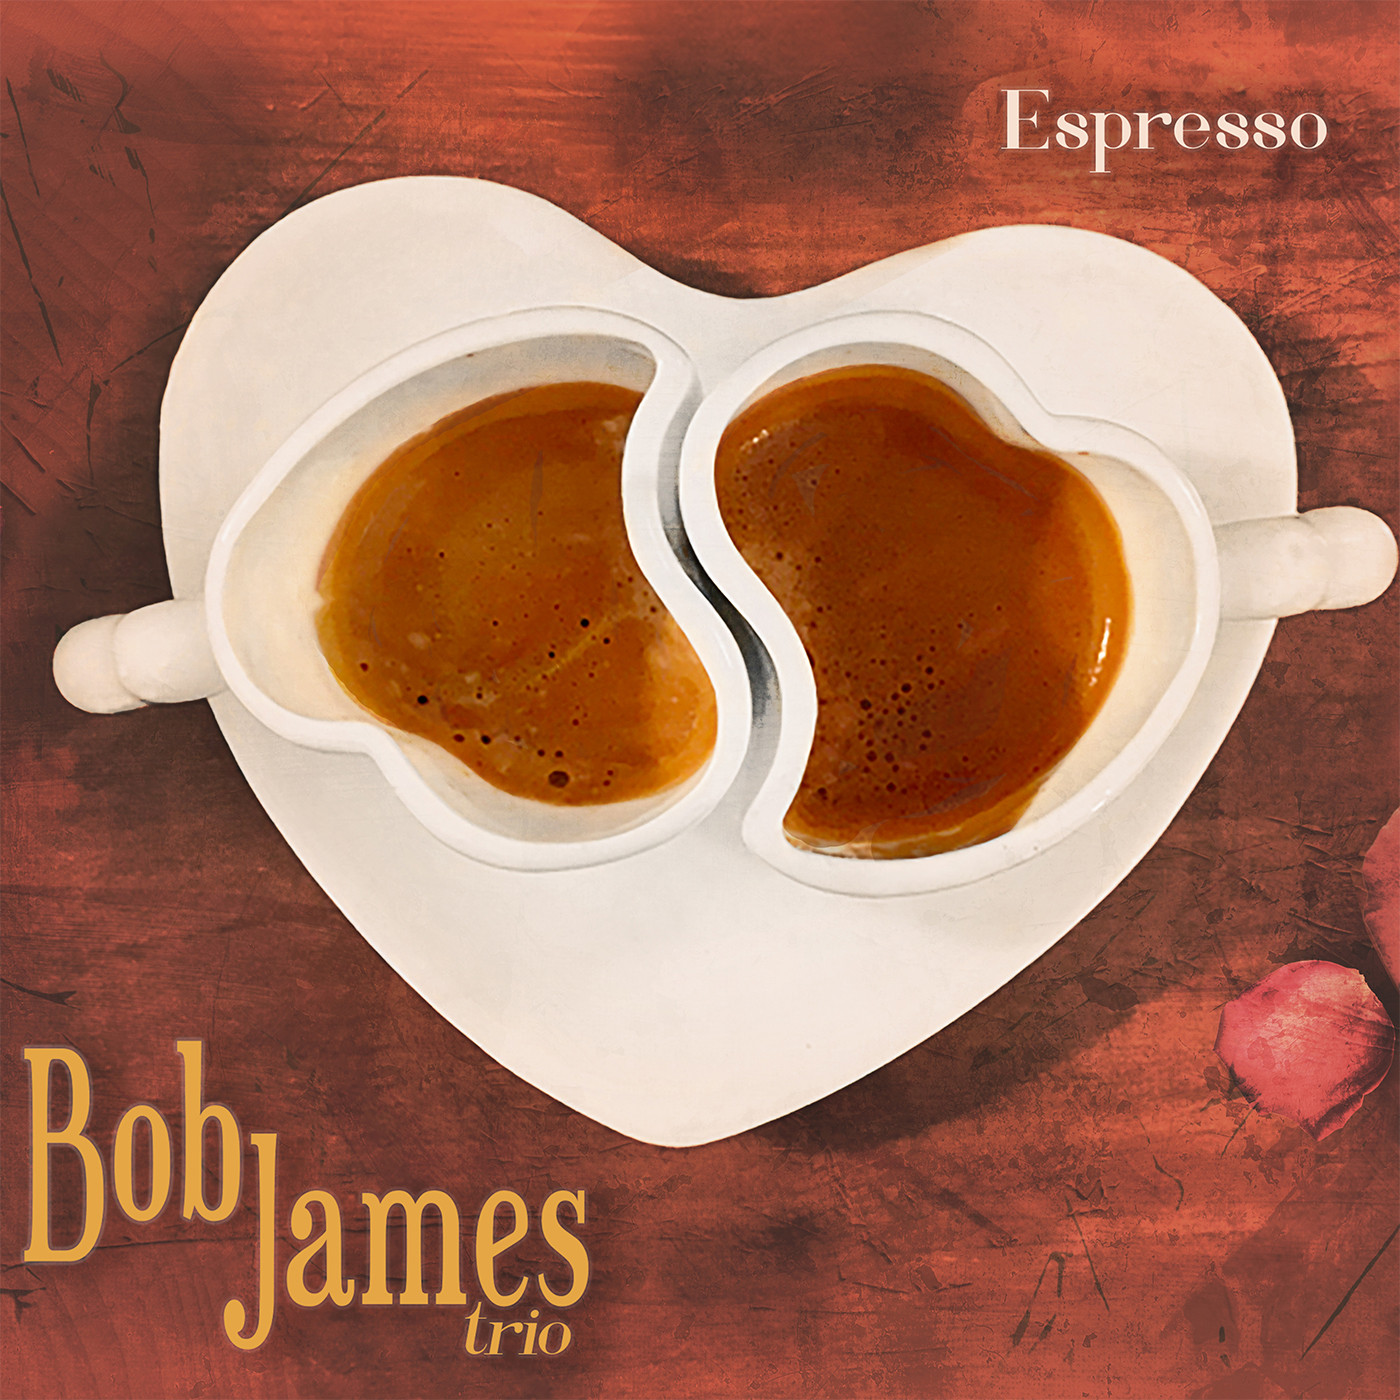 Bob James - Espresso (2018) [HDTracks DSF DSD64/2.82MHz + FLAC 24bit/88,2kHz]